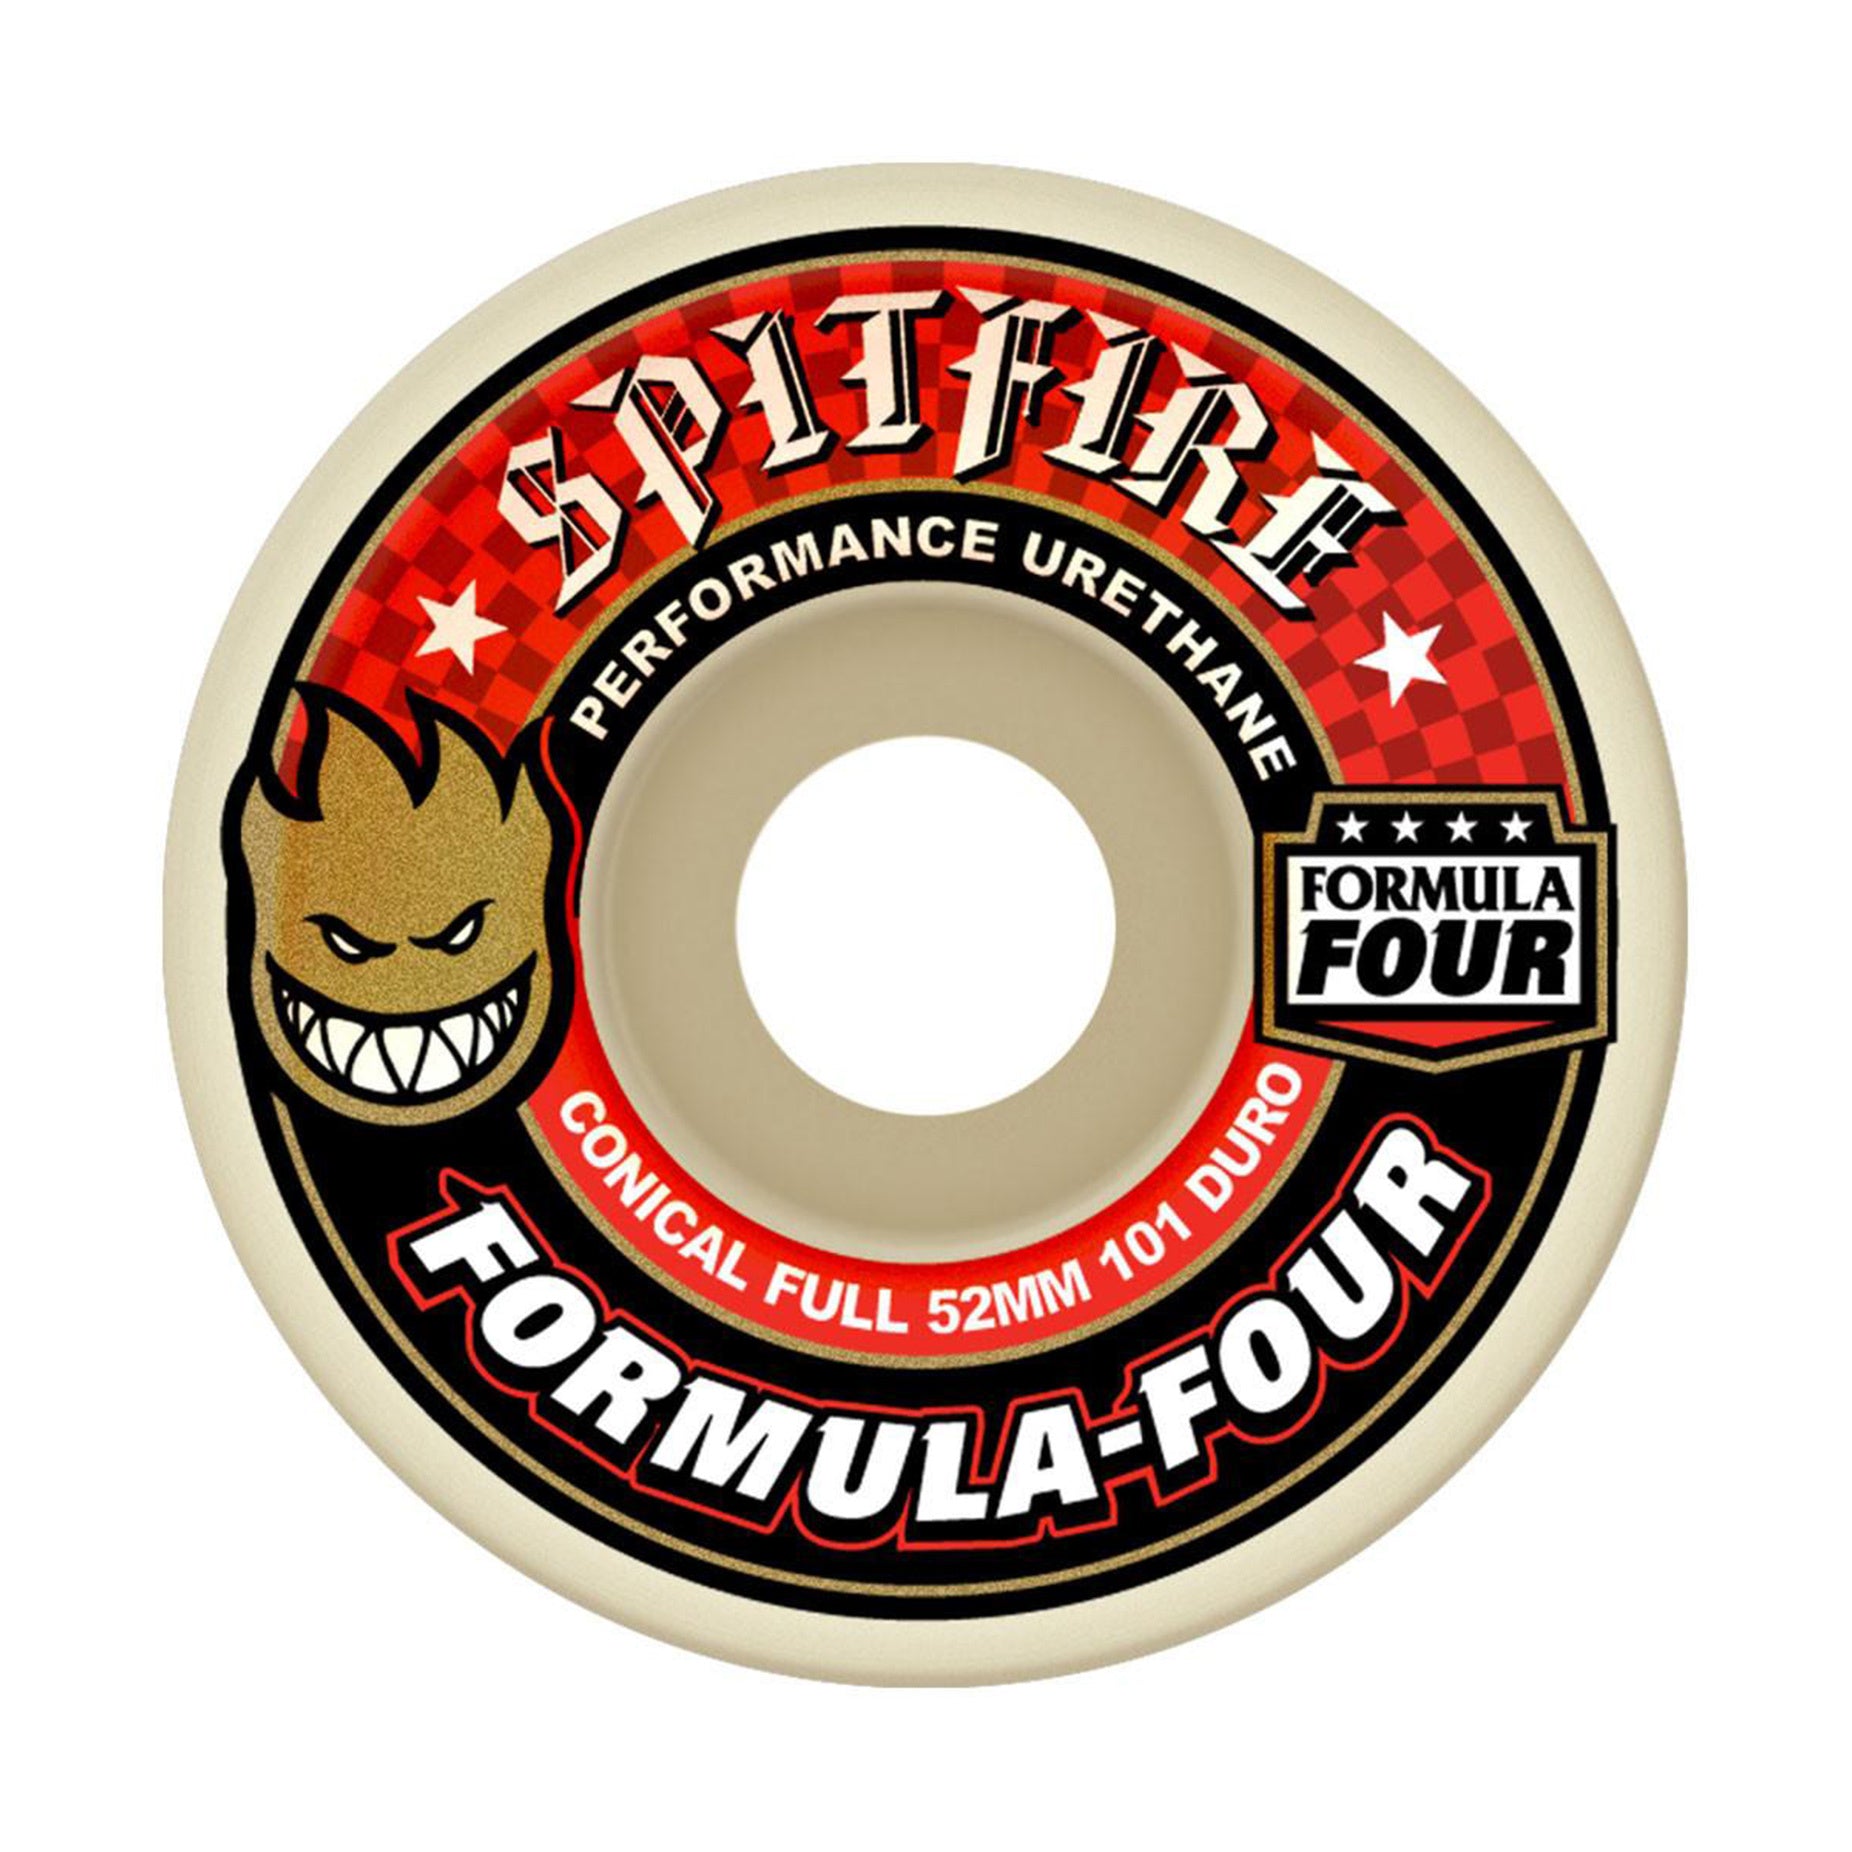 SPITFIRE Formula Four 101D Conical Full wheels - 54mm